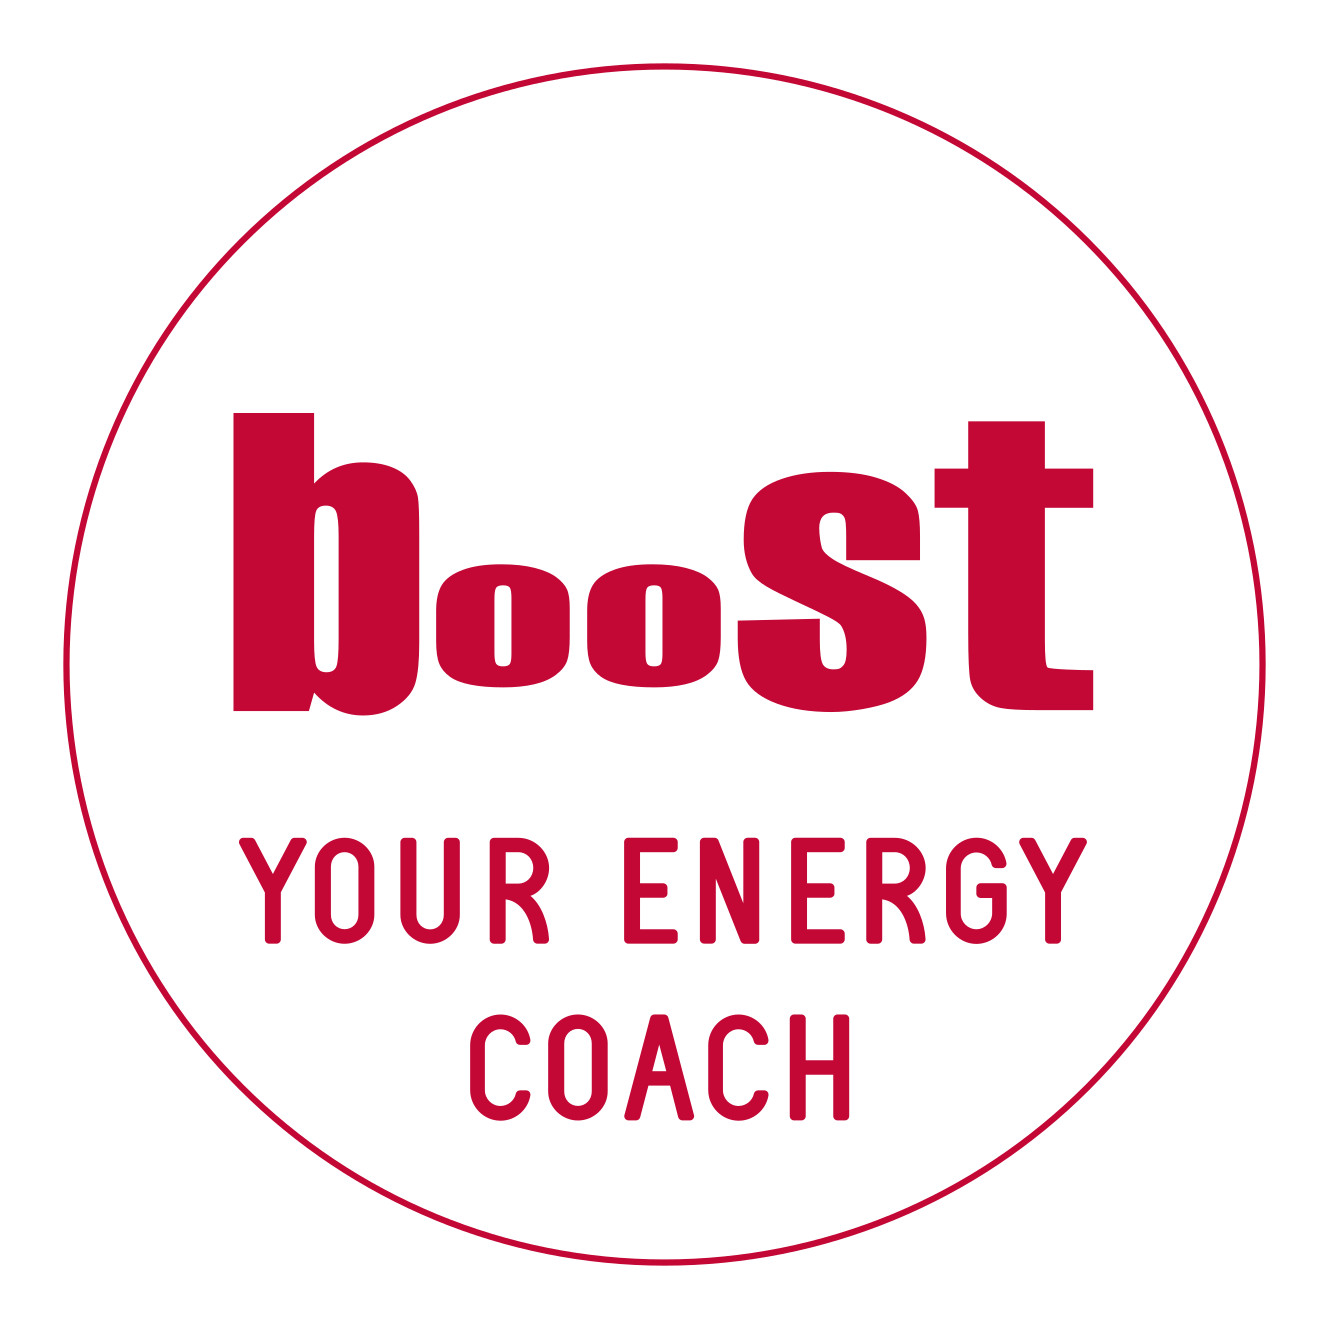 Boost Logo Your Energy Coach Neg_RGB